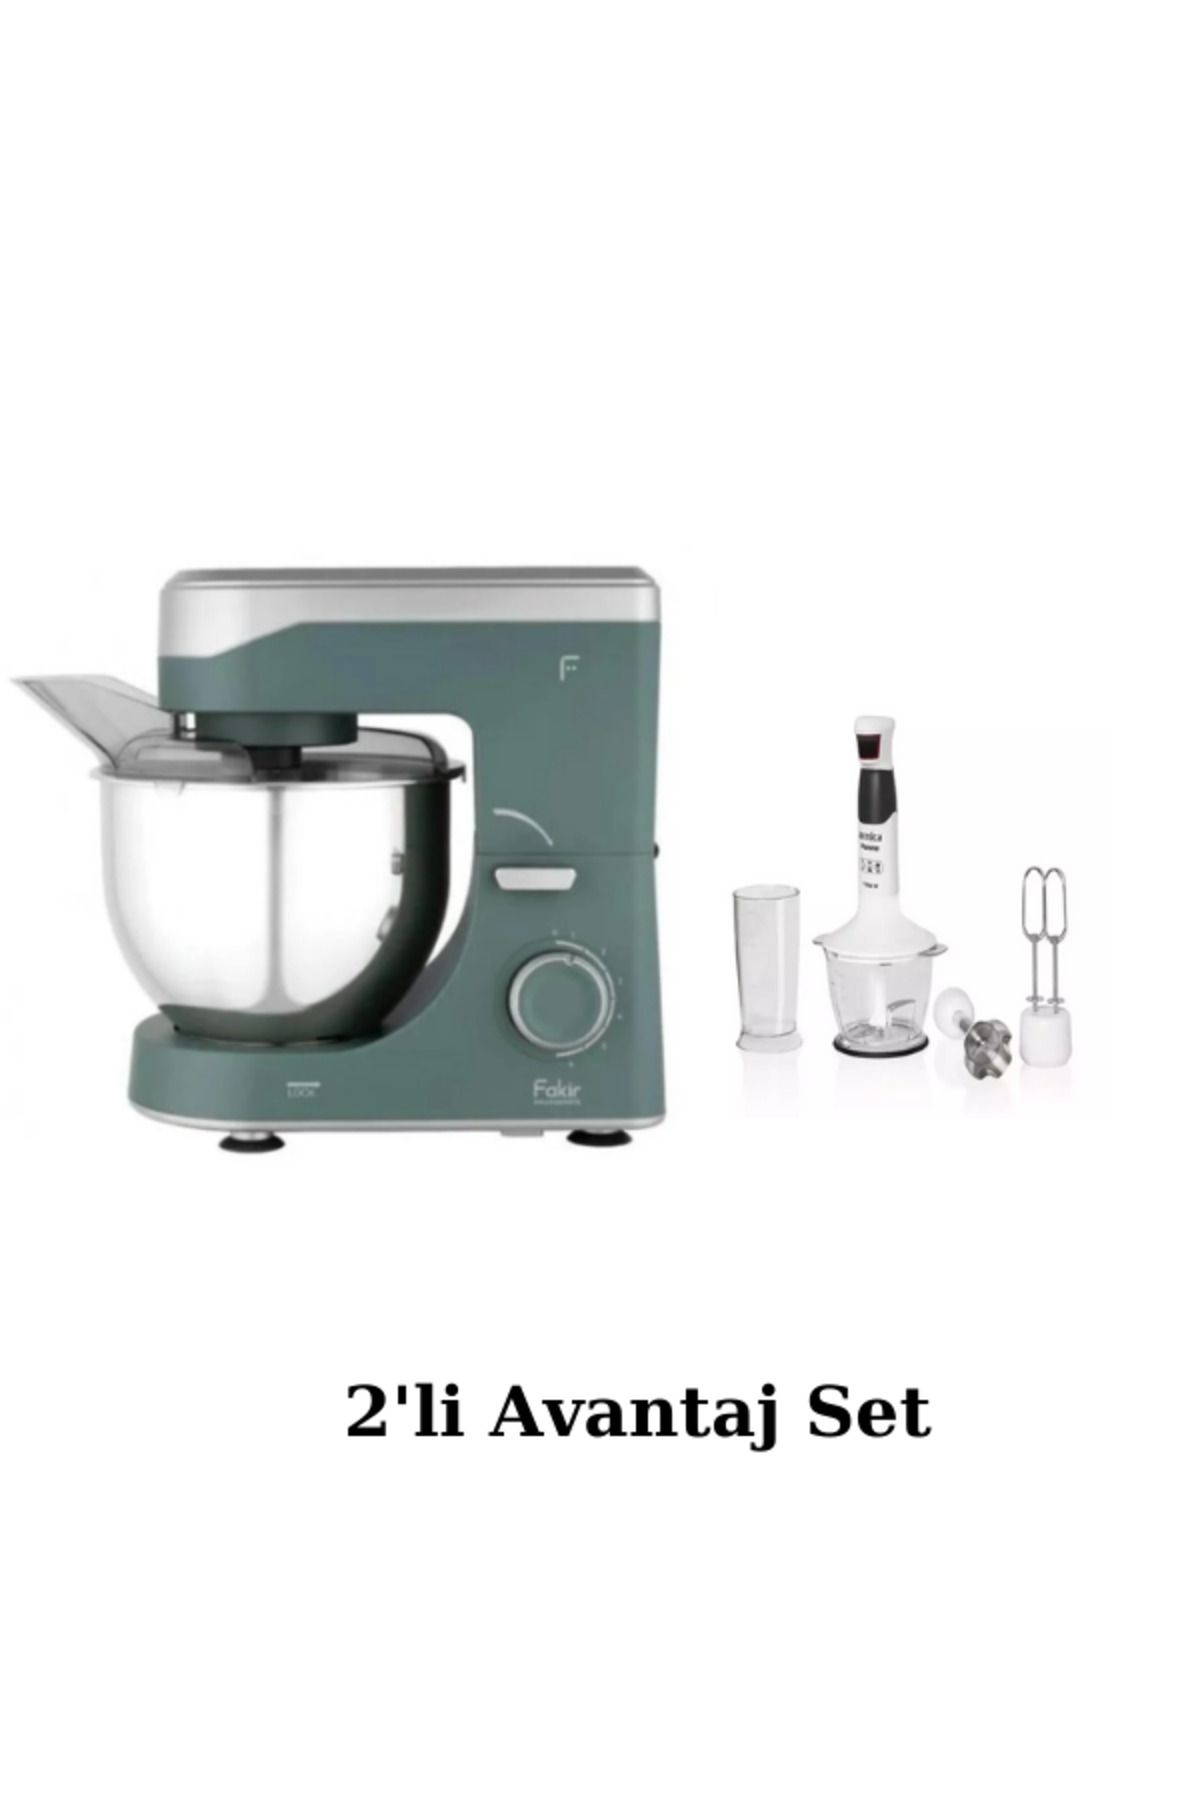 Fakir Arya Deep Mint 1500 W 5 lt Hamur Yoğurma Makinesi + Panna Beyaz 1200 W Blender Seti Avantaj Set